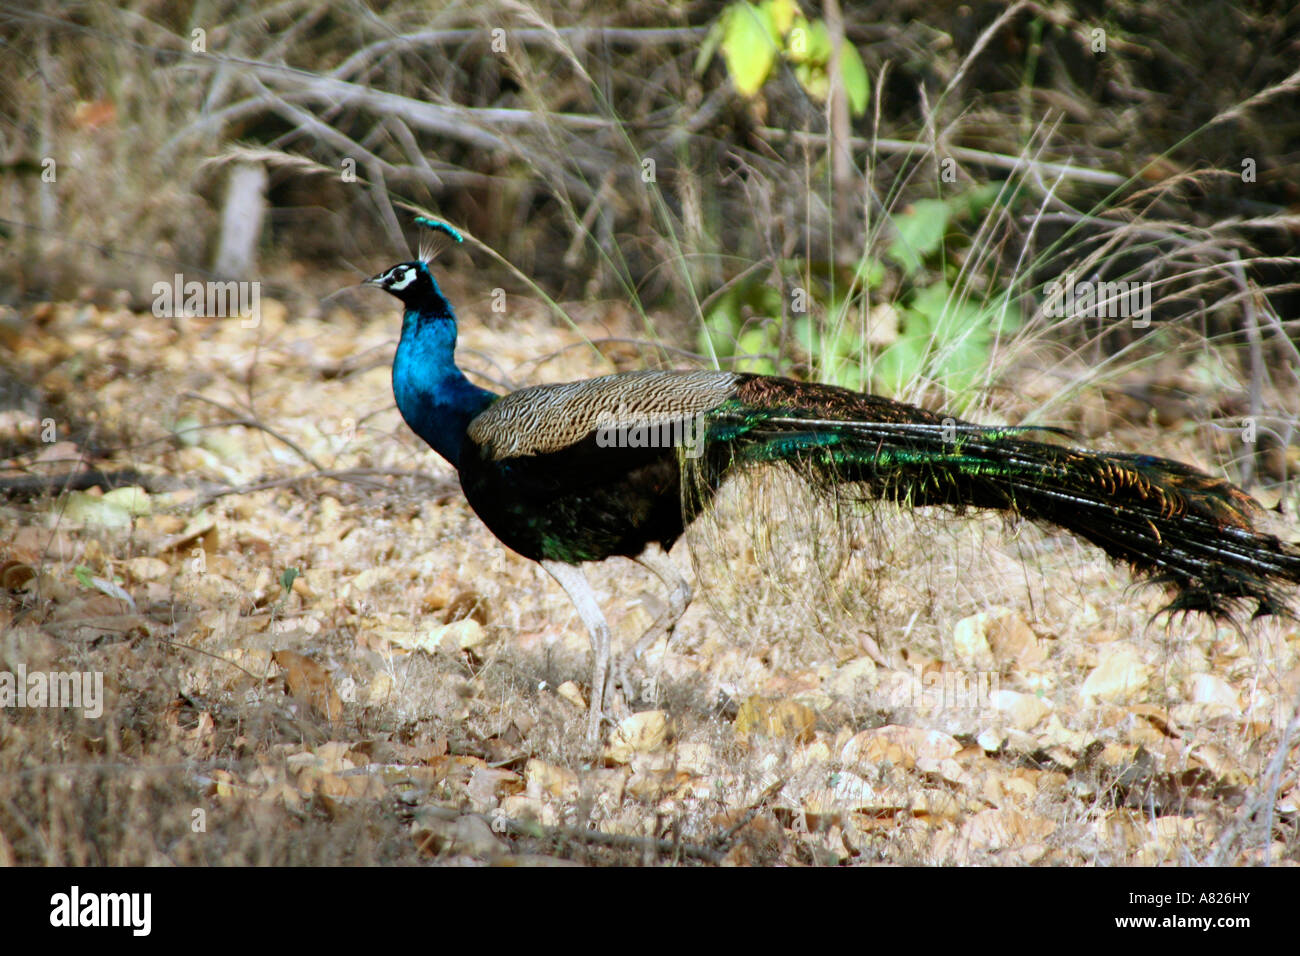 North India Bandavgarh National Park Local Caption Peacock Stock Photo